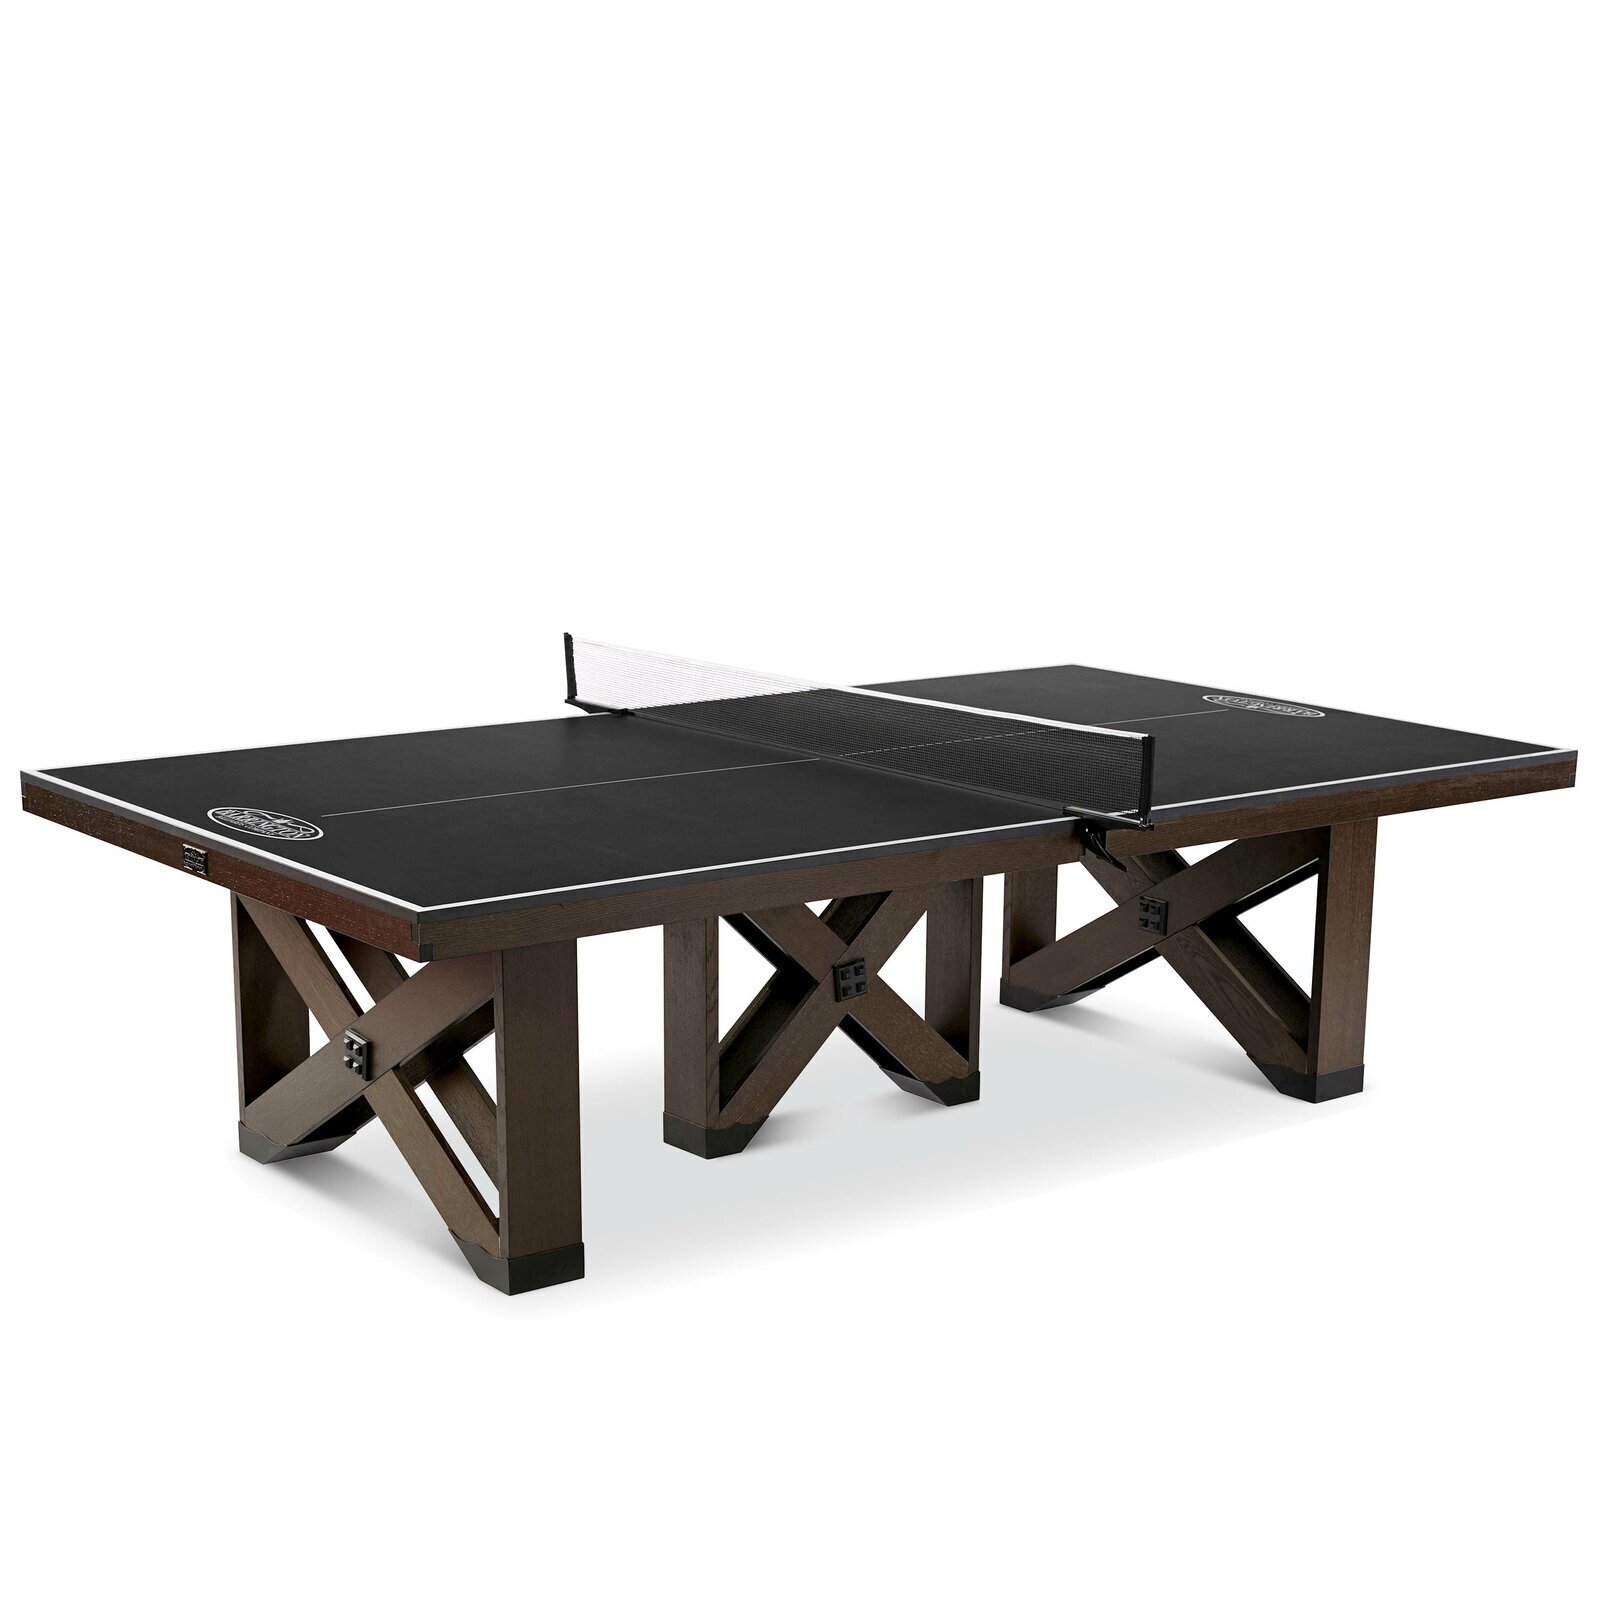 Designer Ping Pong Table Ideas On Foter